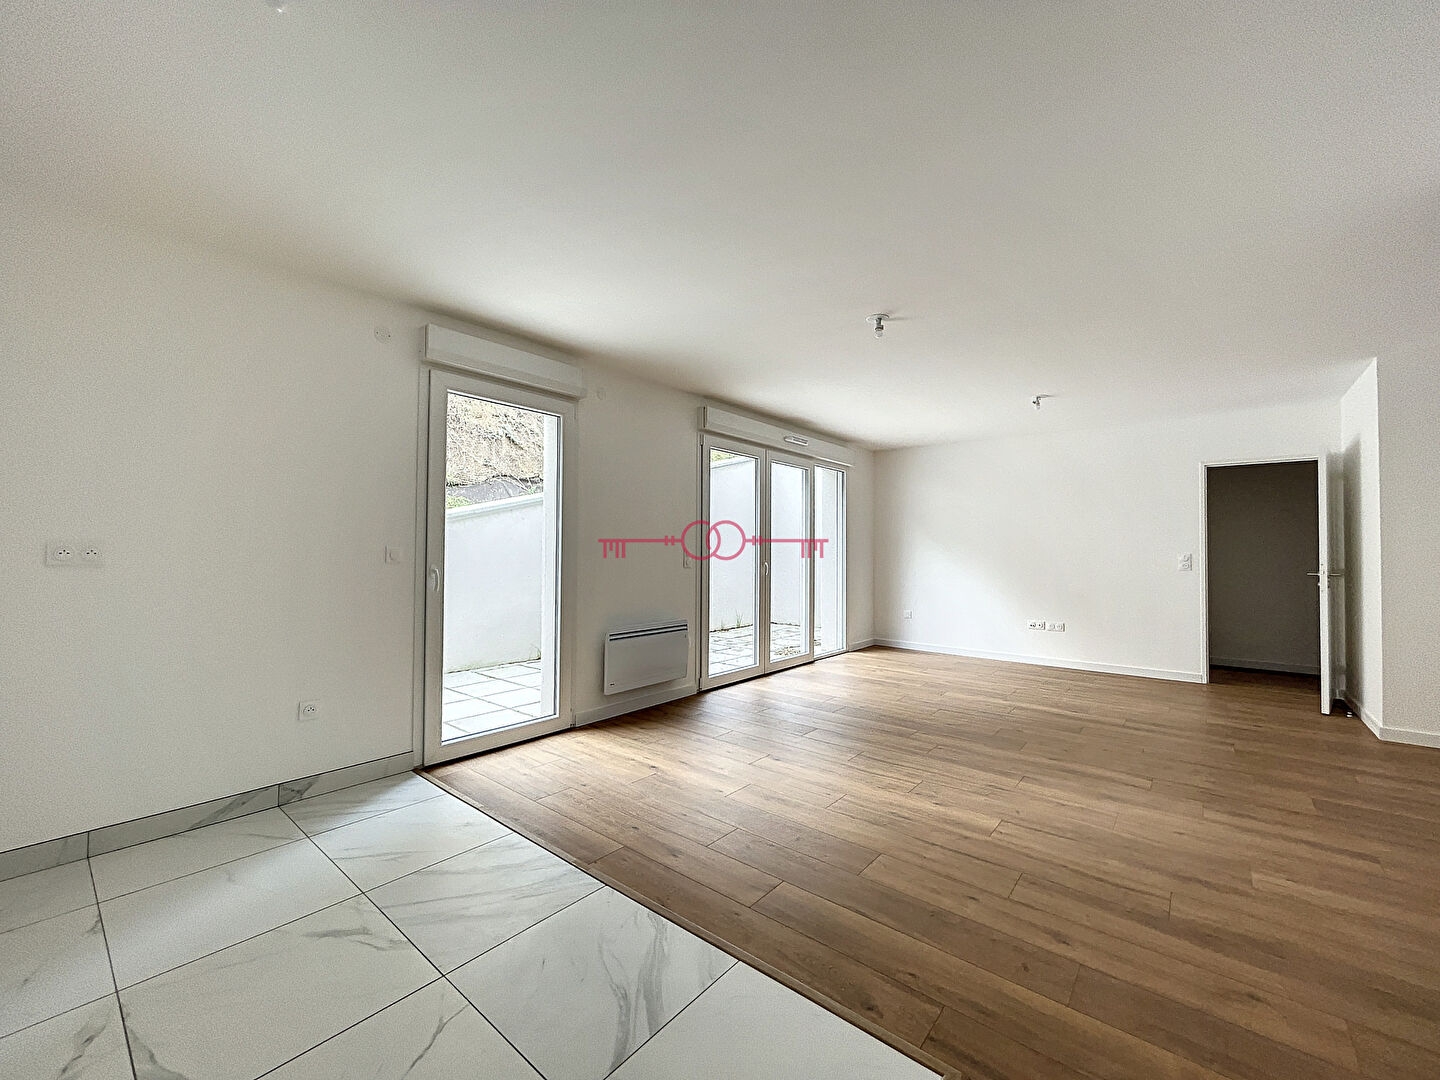 NEUF - Appartement 4 pièce(s) 90,87 m2 - 3